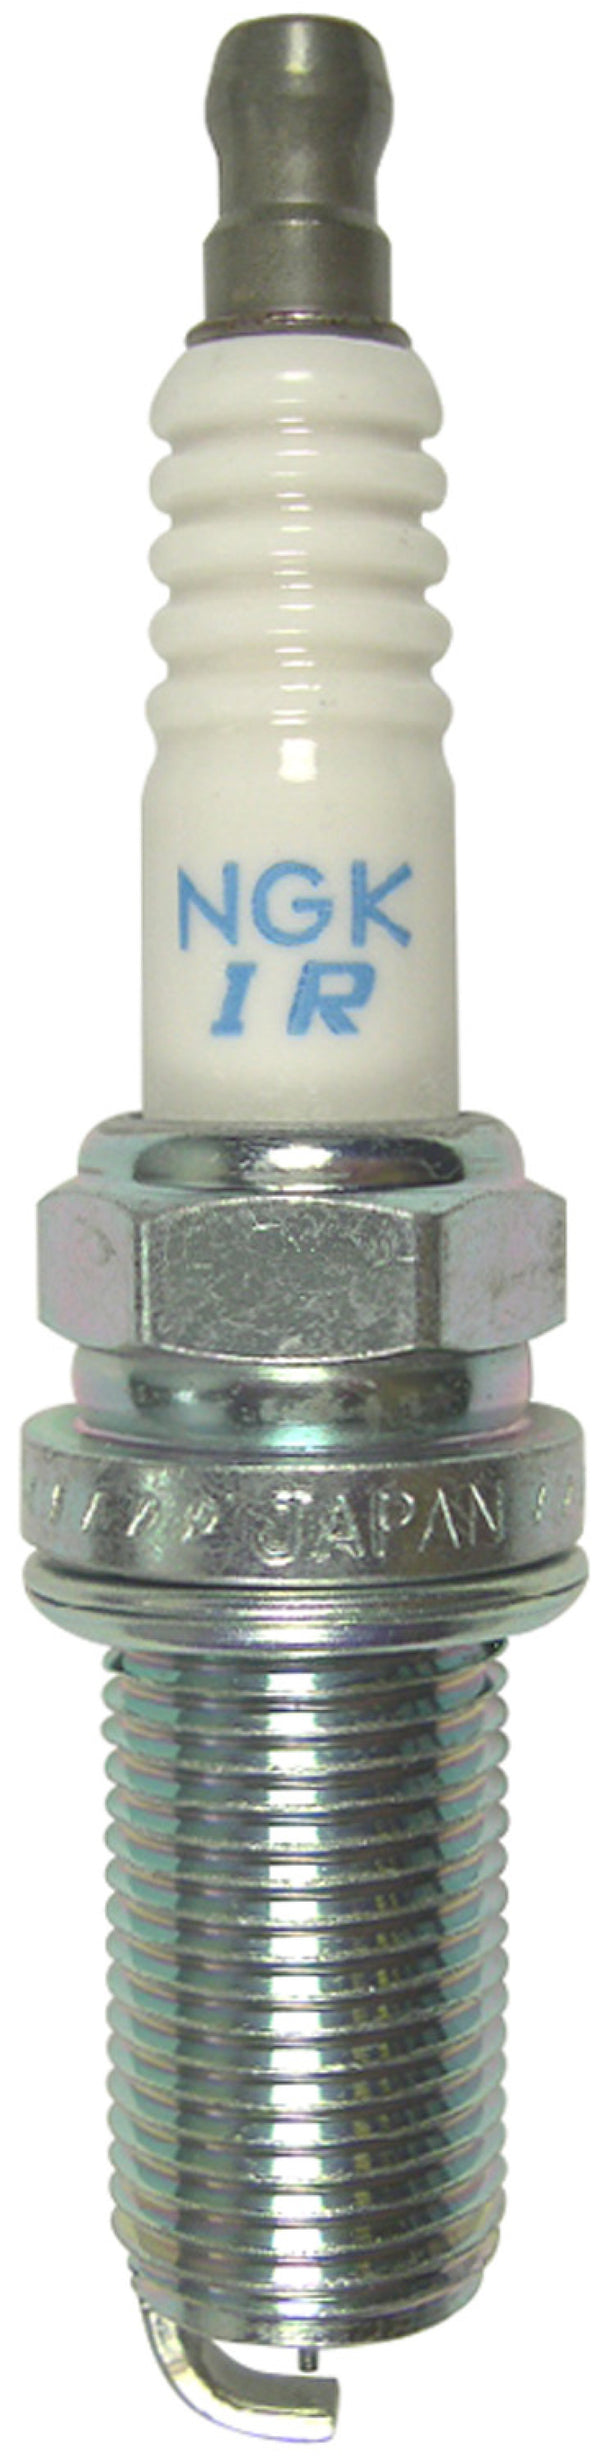 NGK Iridium Spark Plugs (ILFR7H) – Set of 4 - 19-21 STI